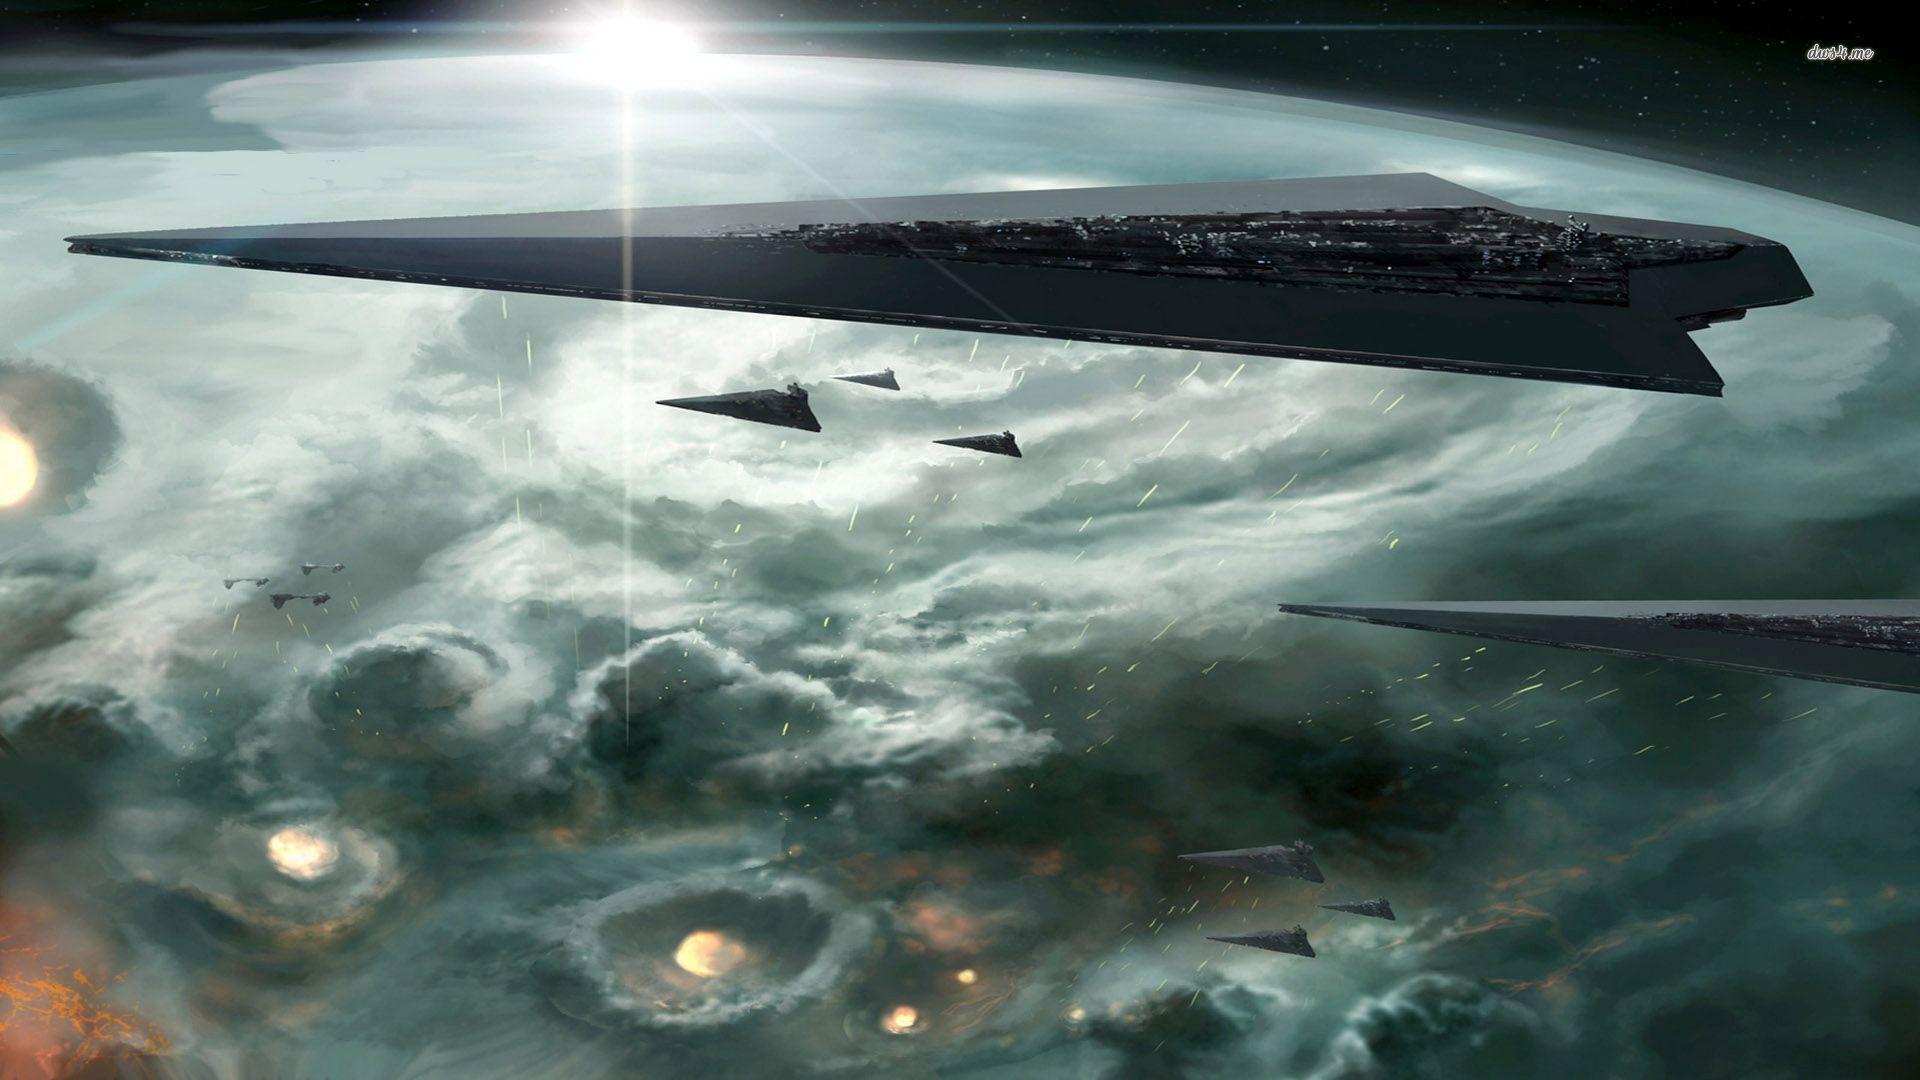 Star Wars Imperial Star Destroyer HD wallpaper. Star wars wallpaper, Star wars art, Imperial star destroyers